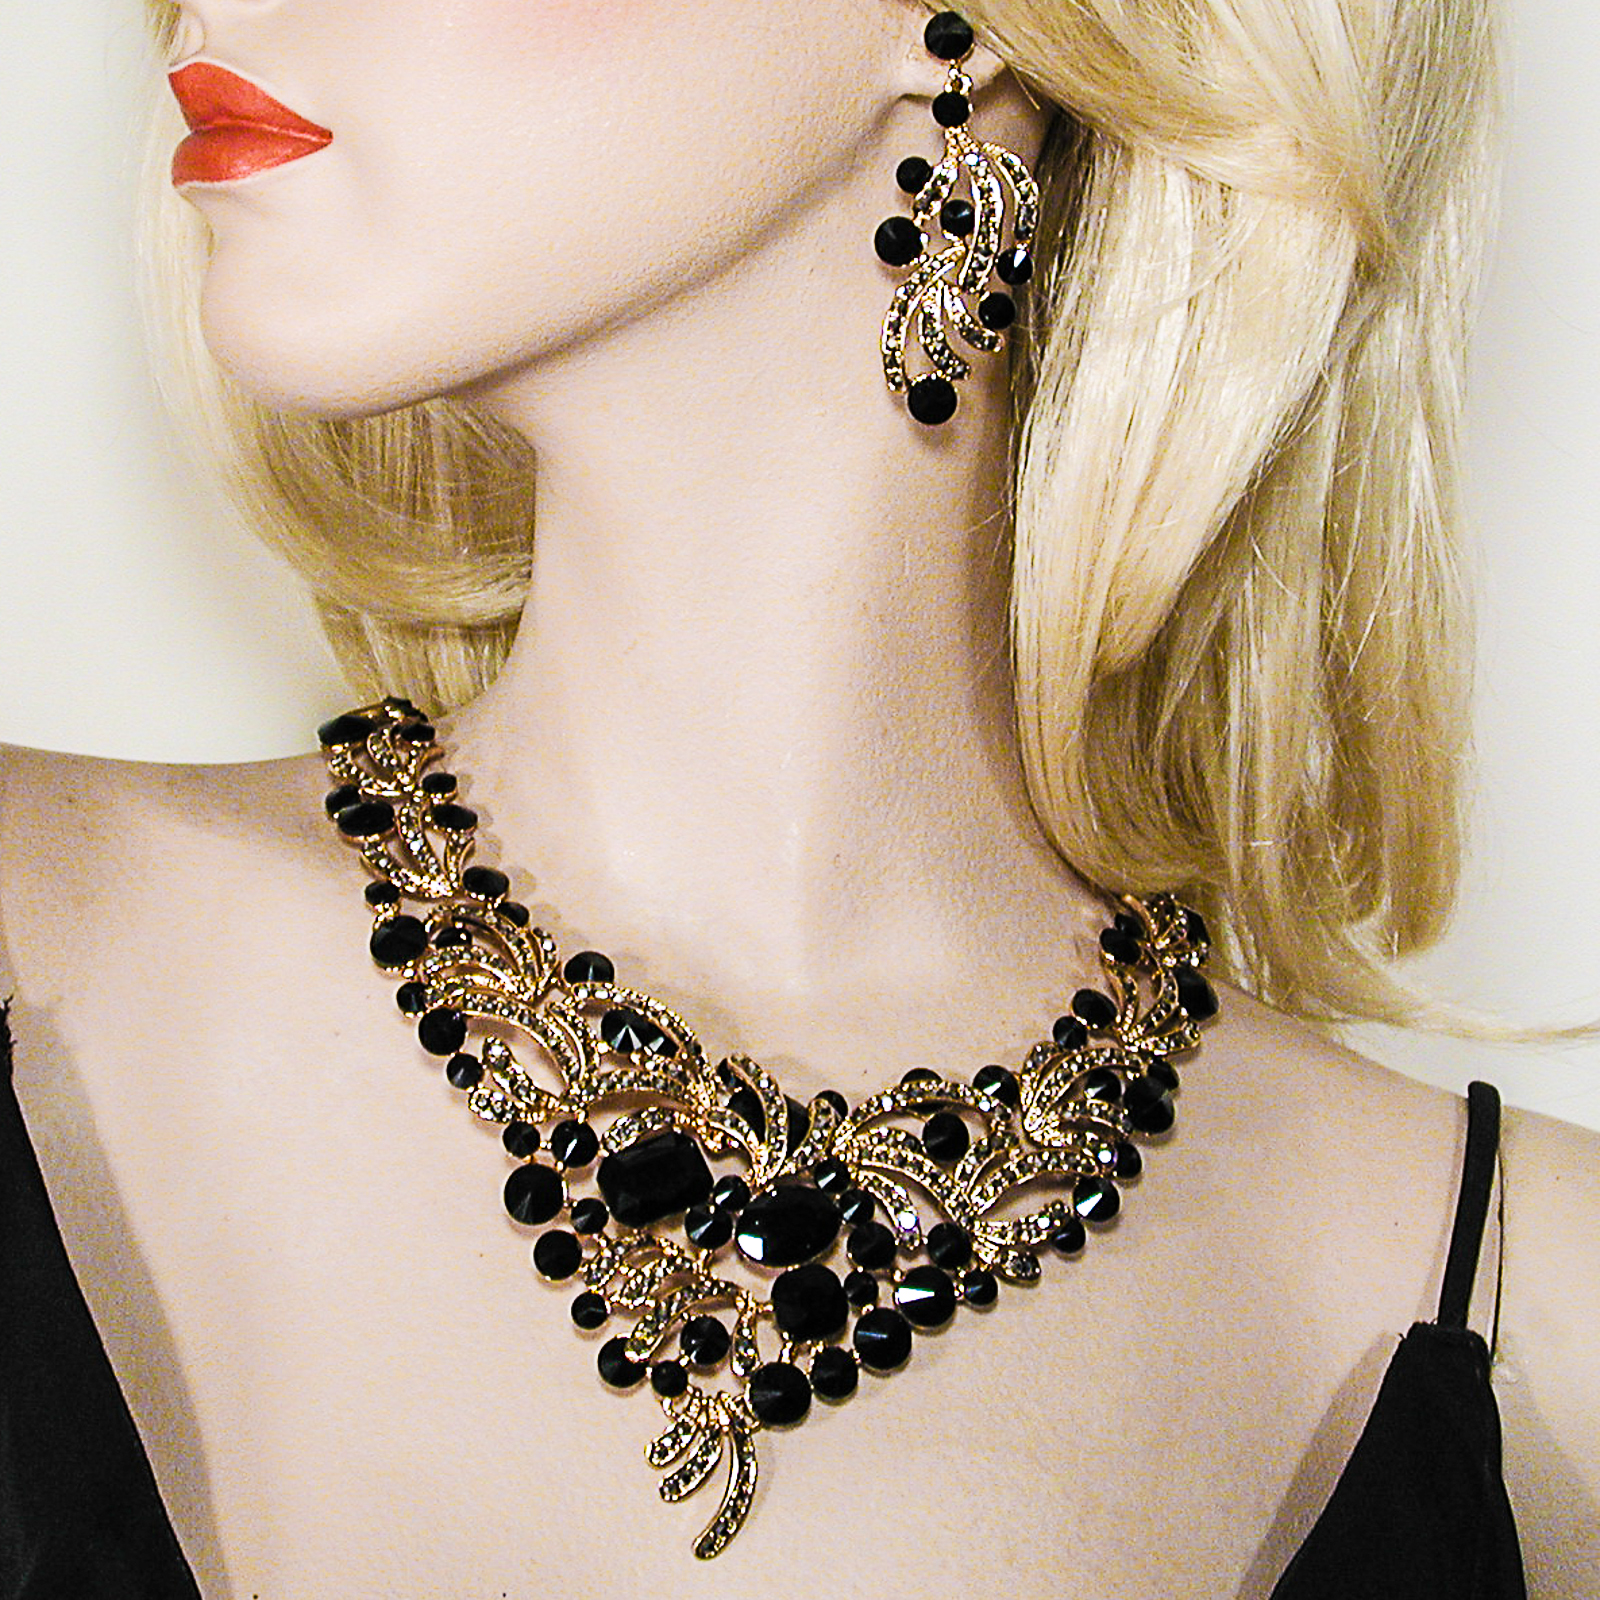 Large Statement Crystal Rhinestone Spray Bib Necklace Earrings Set, a fashion accessorie - Evening Elegance